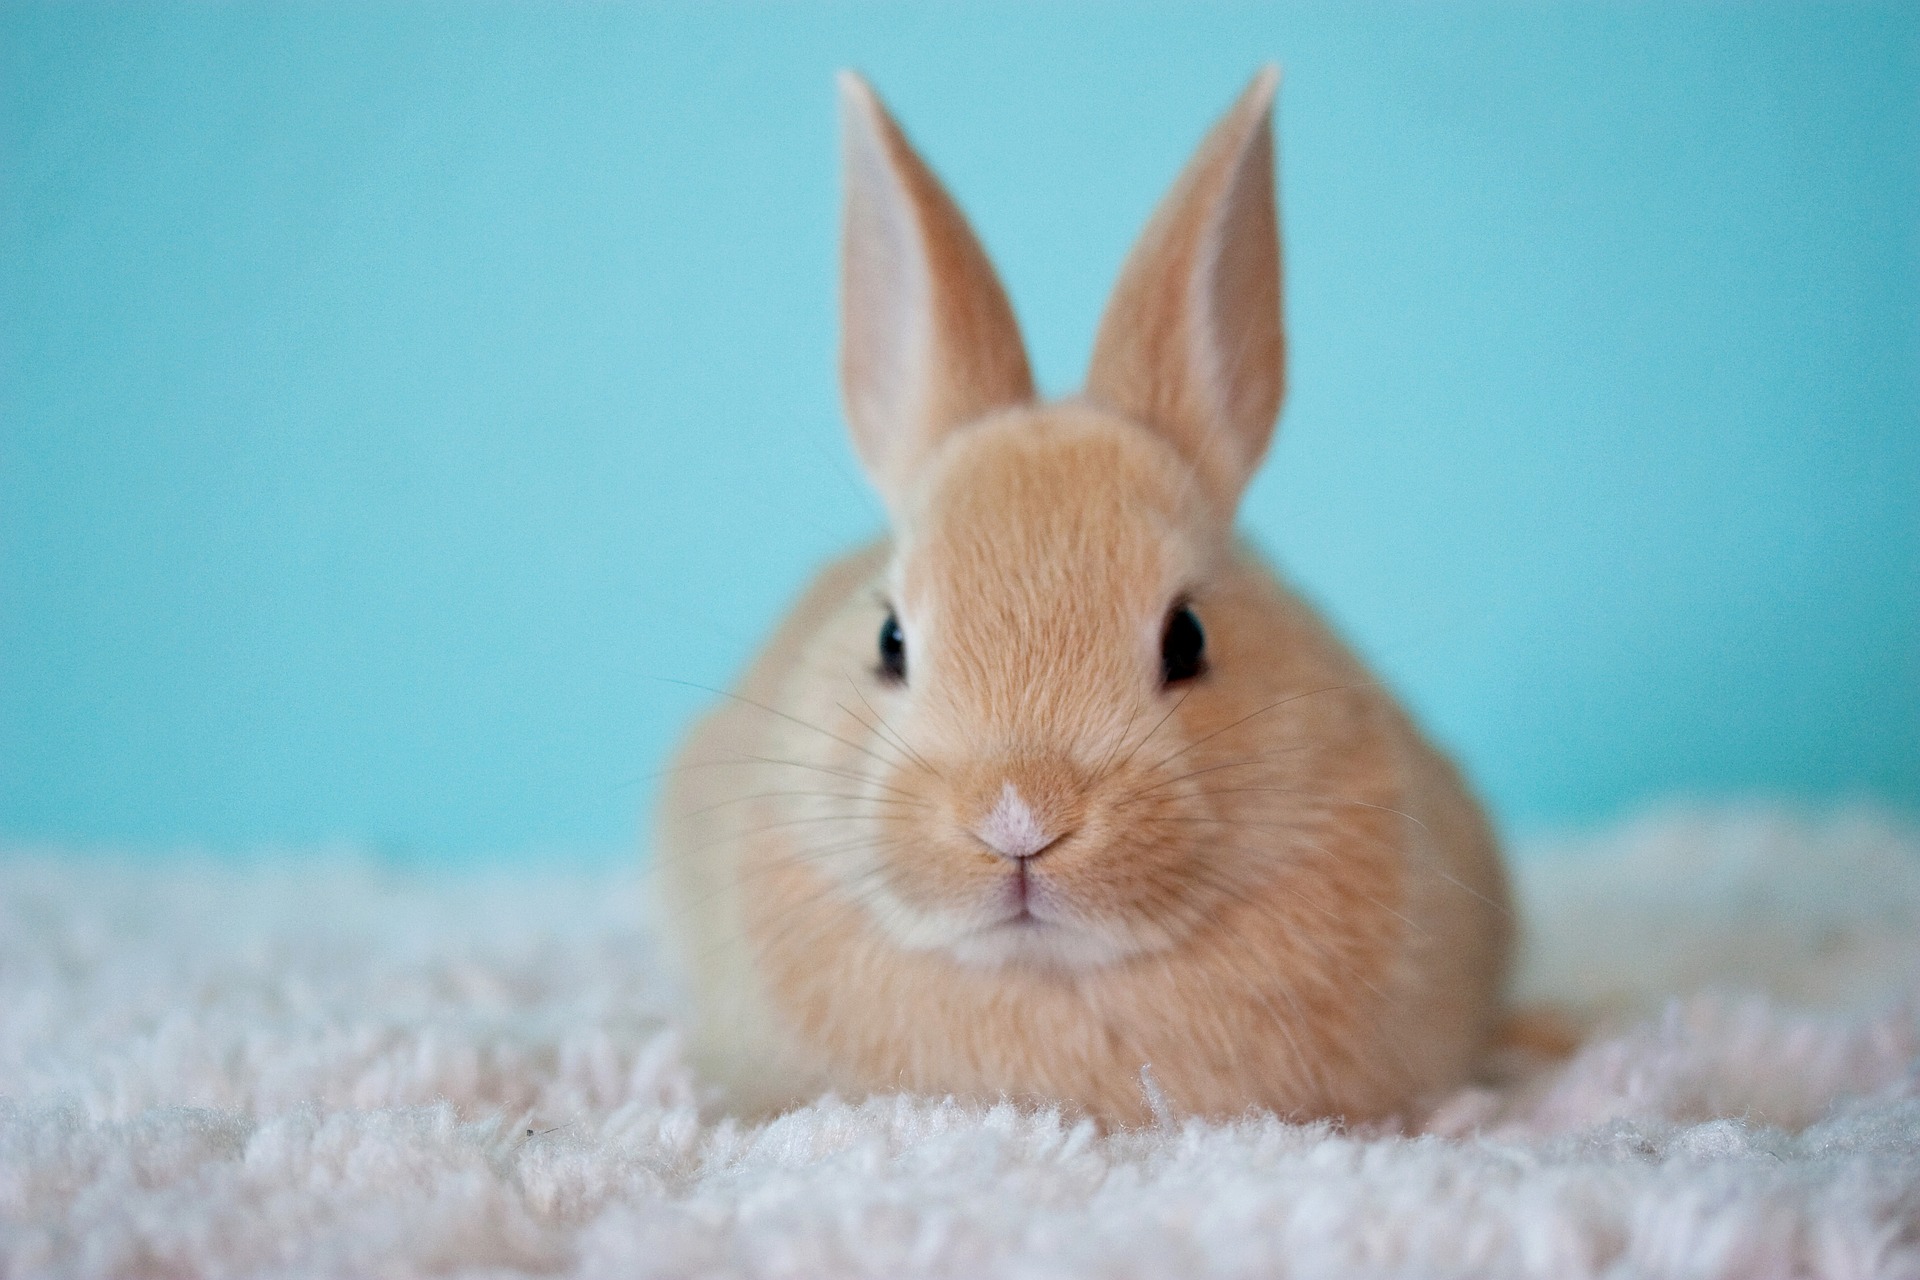 australia has banned cosmetic animal testing